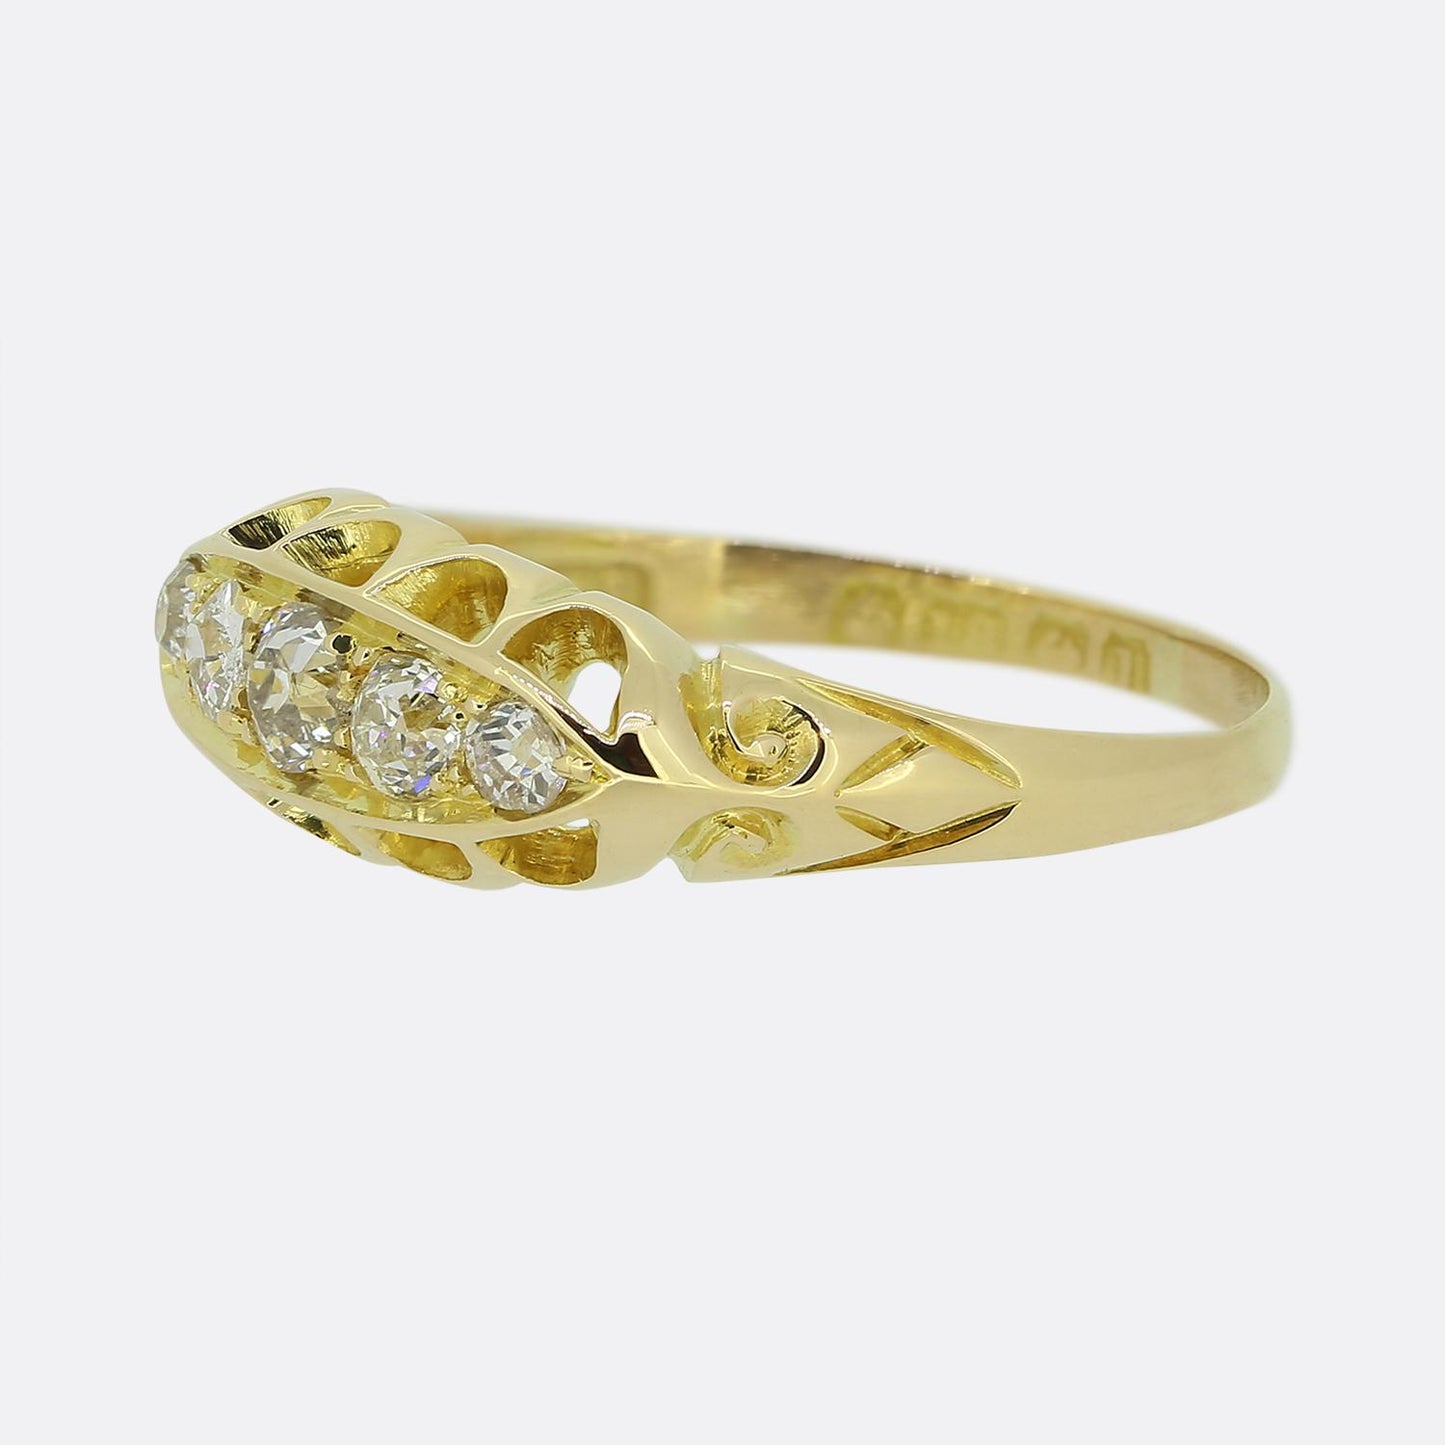 Edwardian Five-Stone Diamond Ring